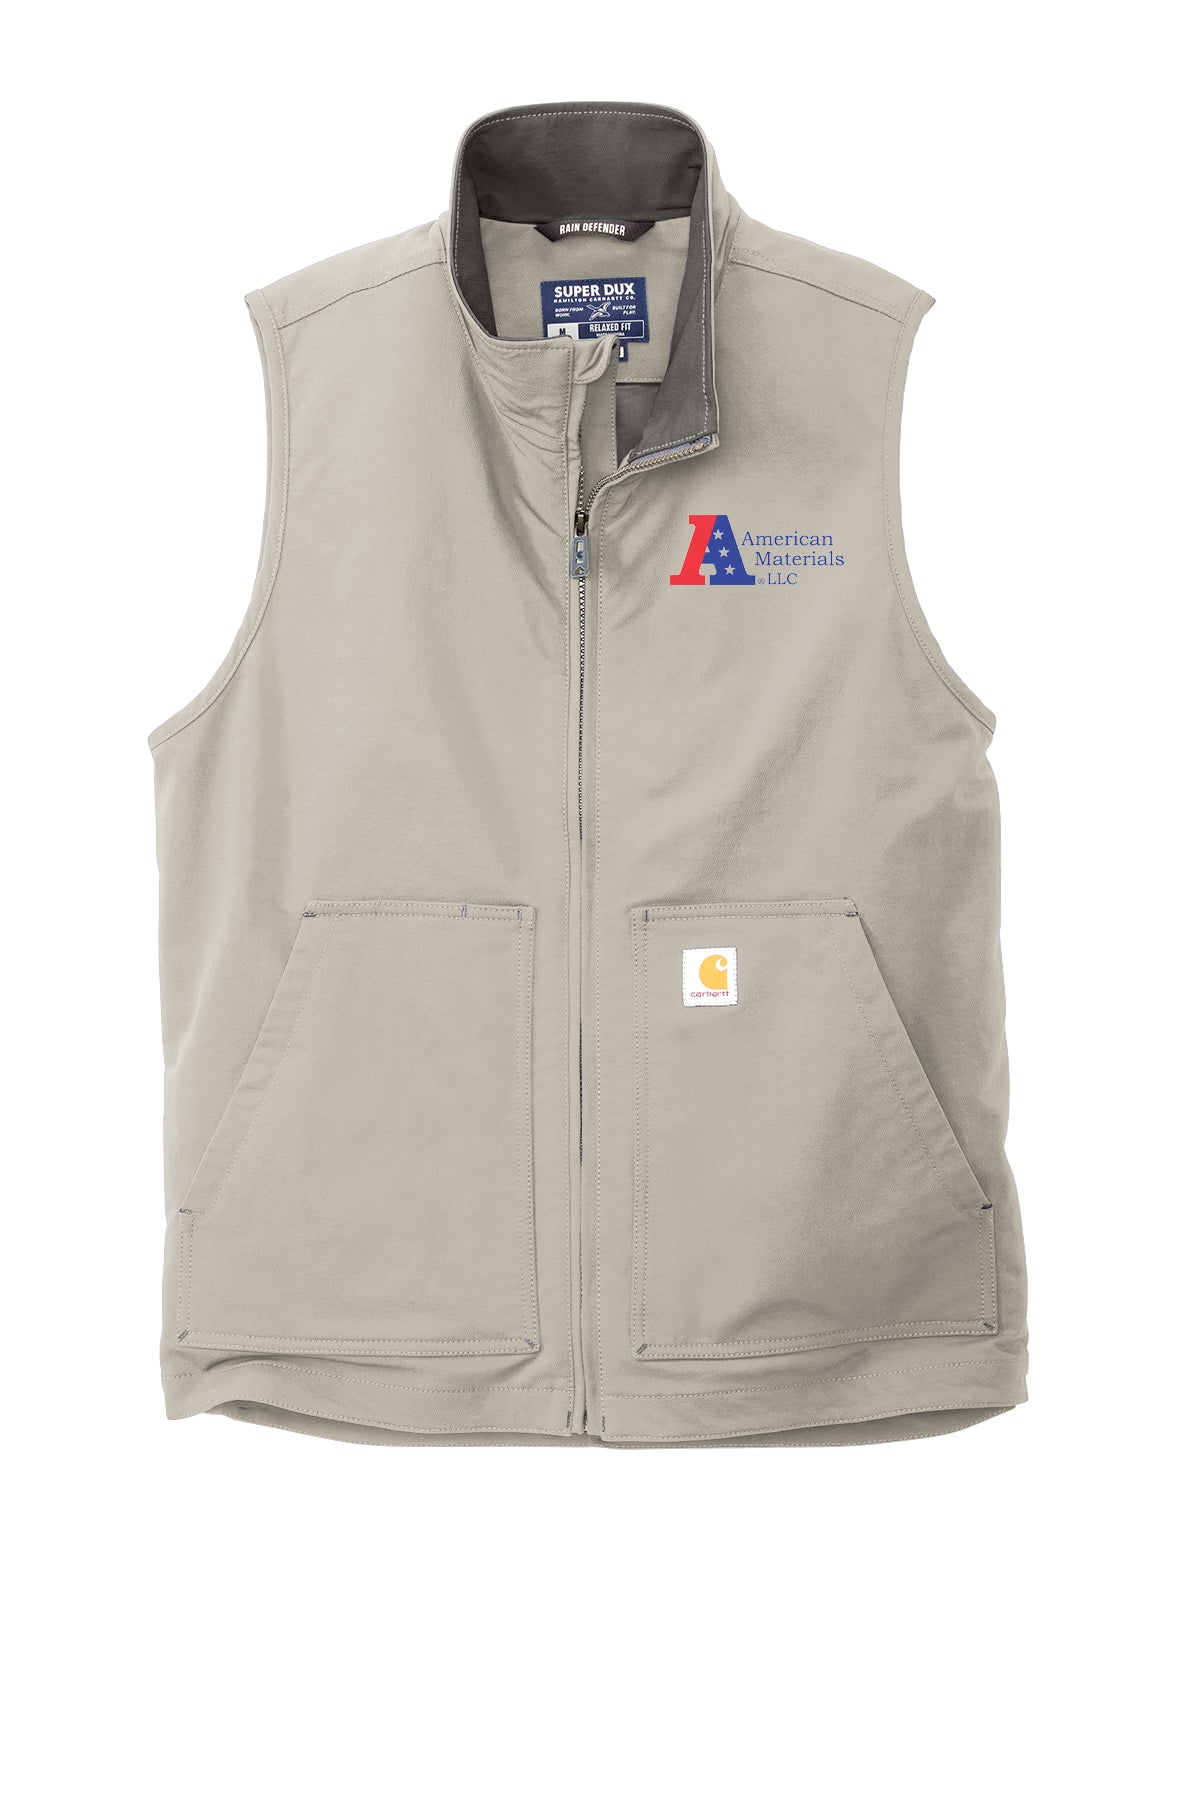 American Materials Carhartt Soft Shell Vest